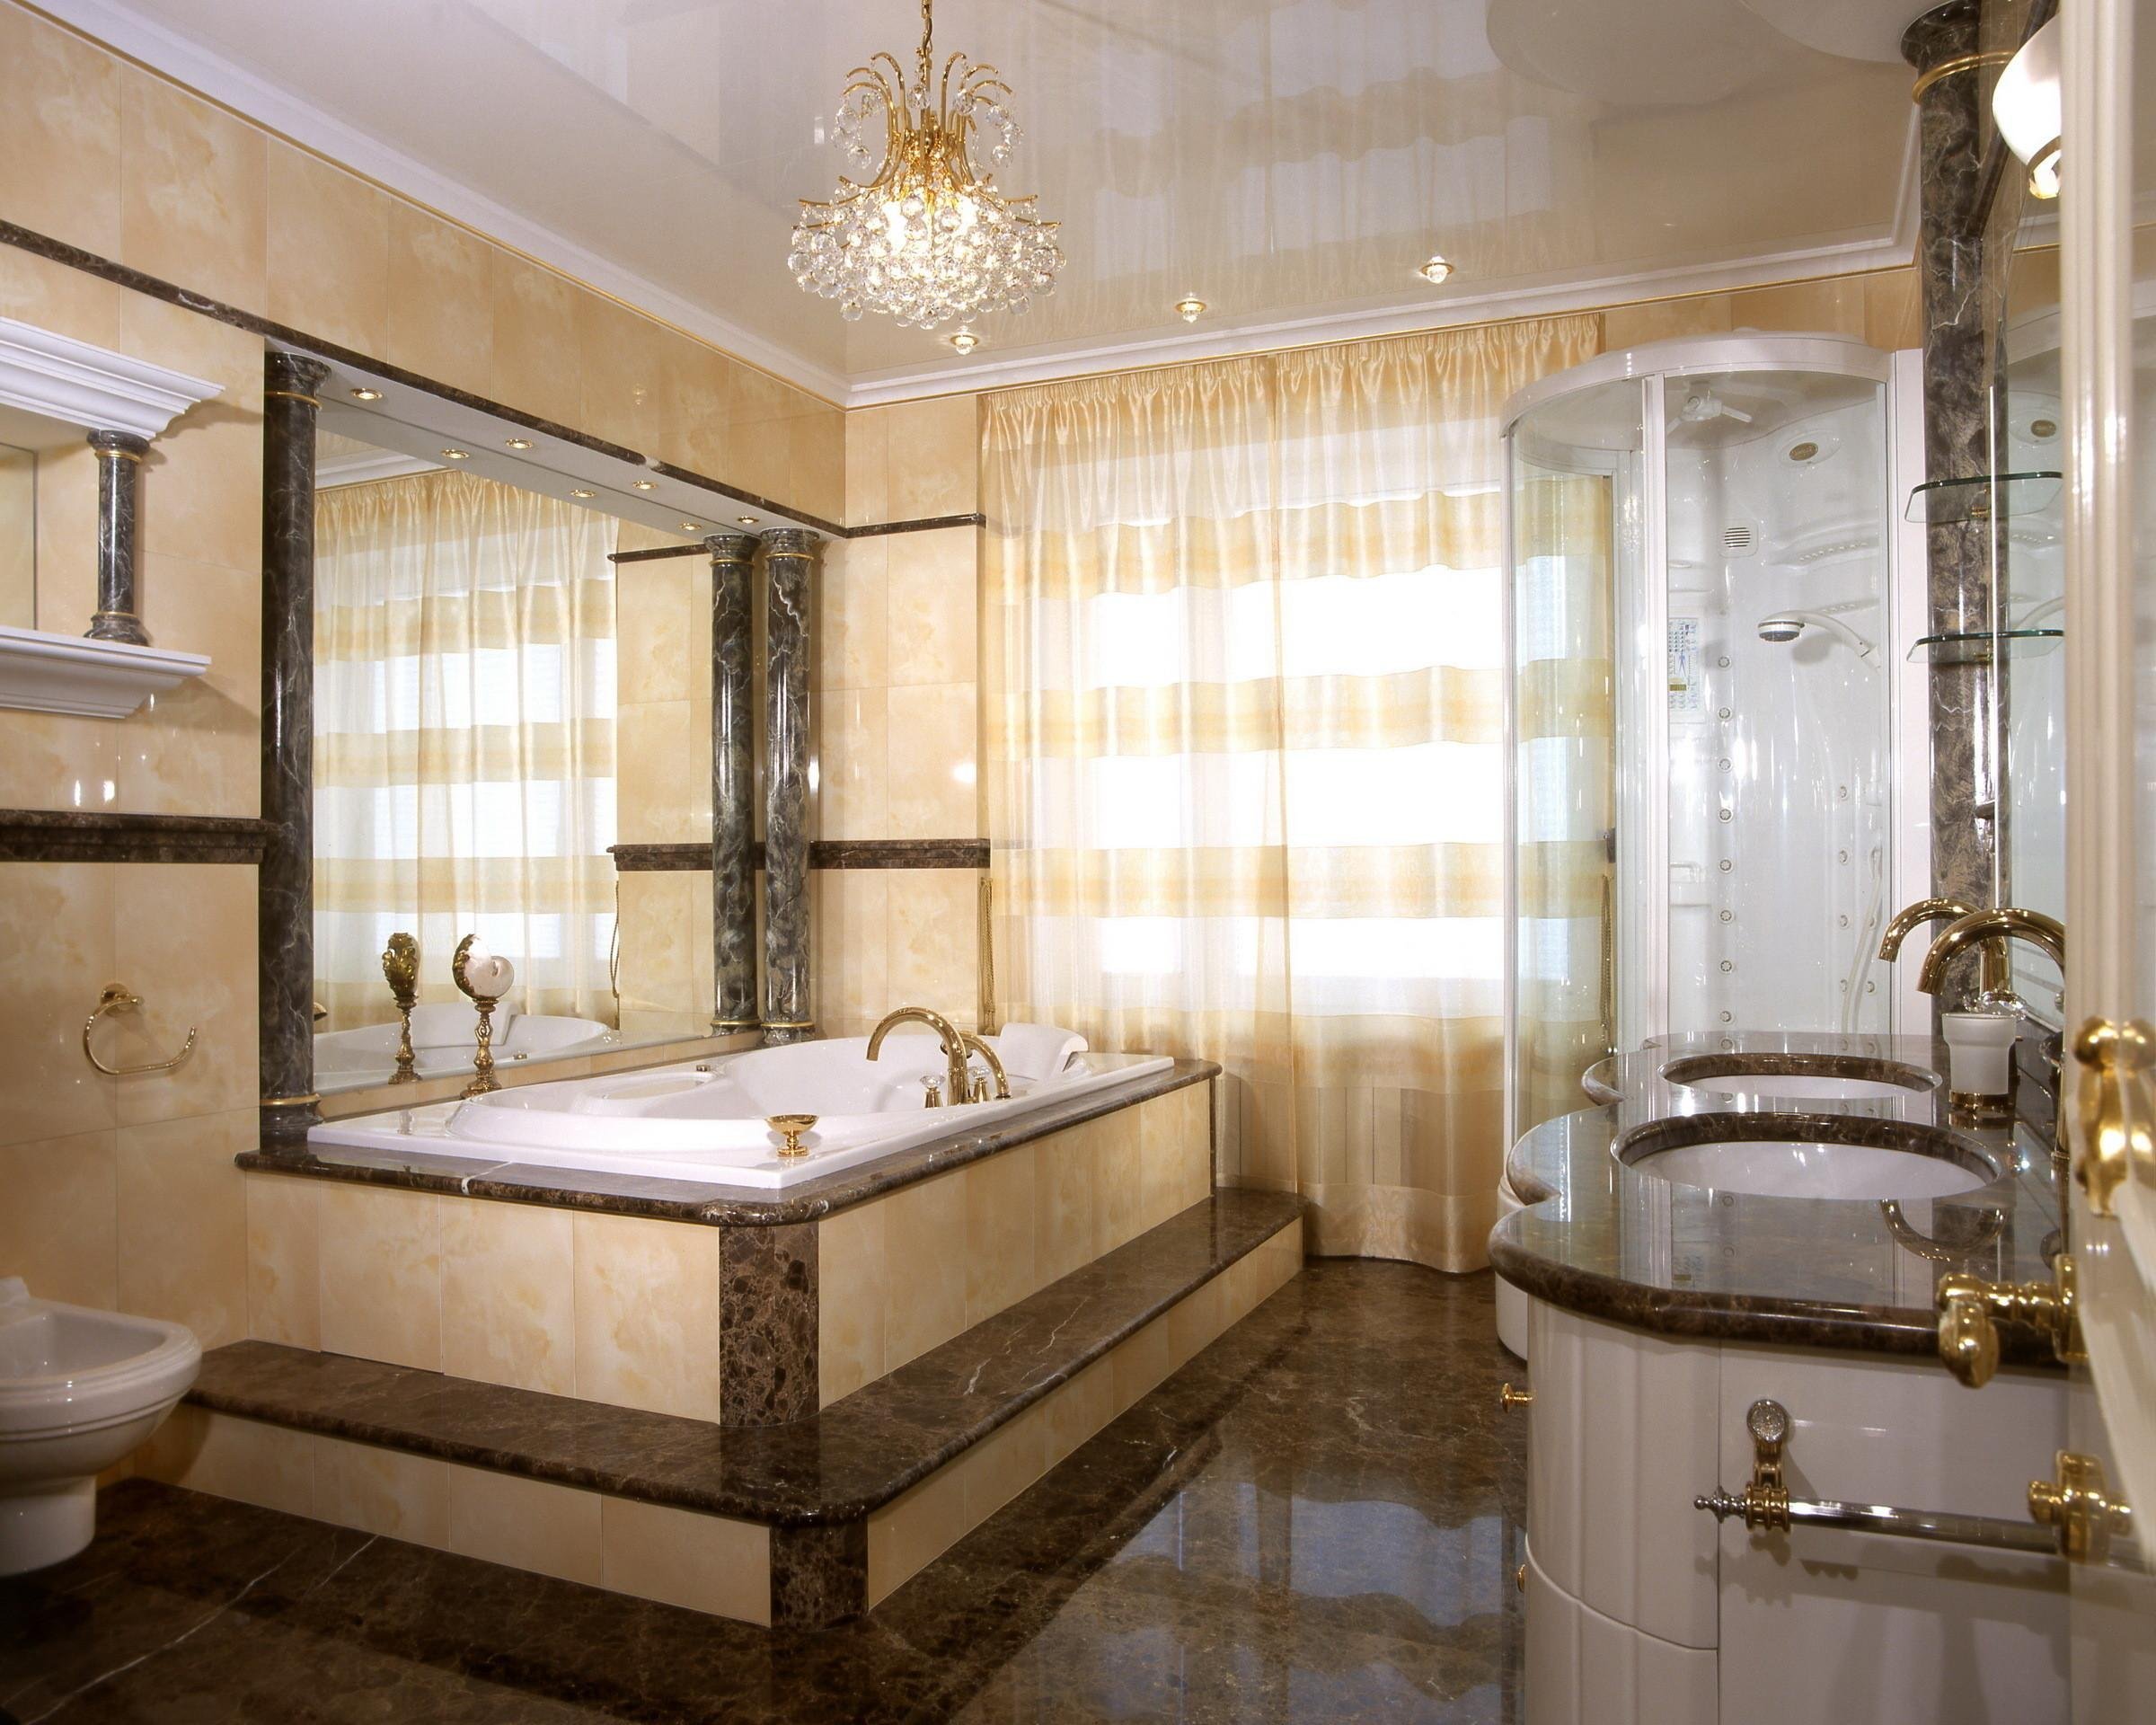 Самые красивые ванные. Красивая ванная комната. Шикарные Ванные комнаты. Элитные Ванные комнаты. Красивый интерьер ванной комнаты.